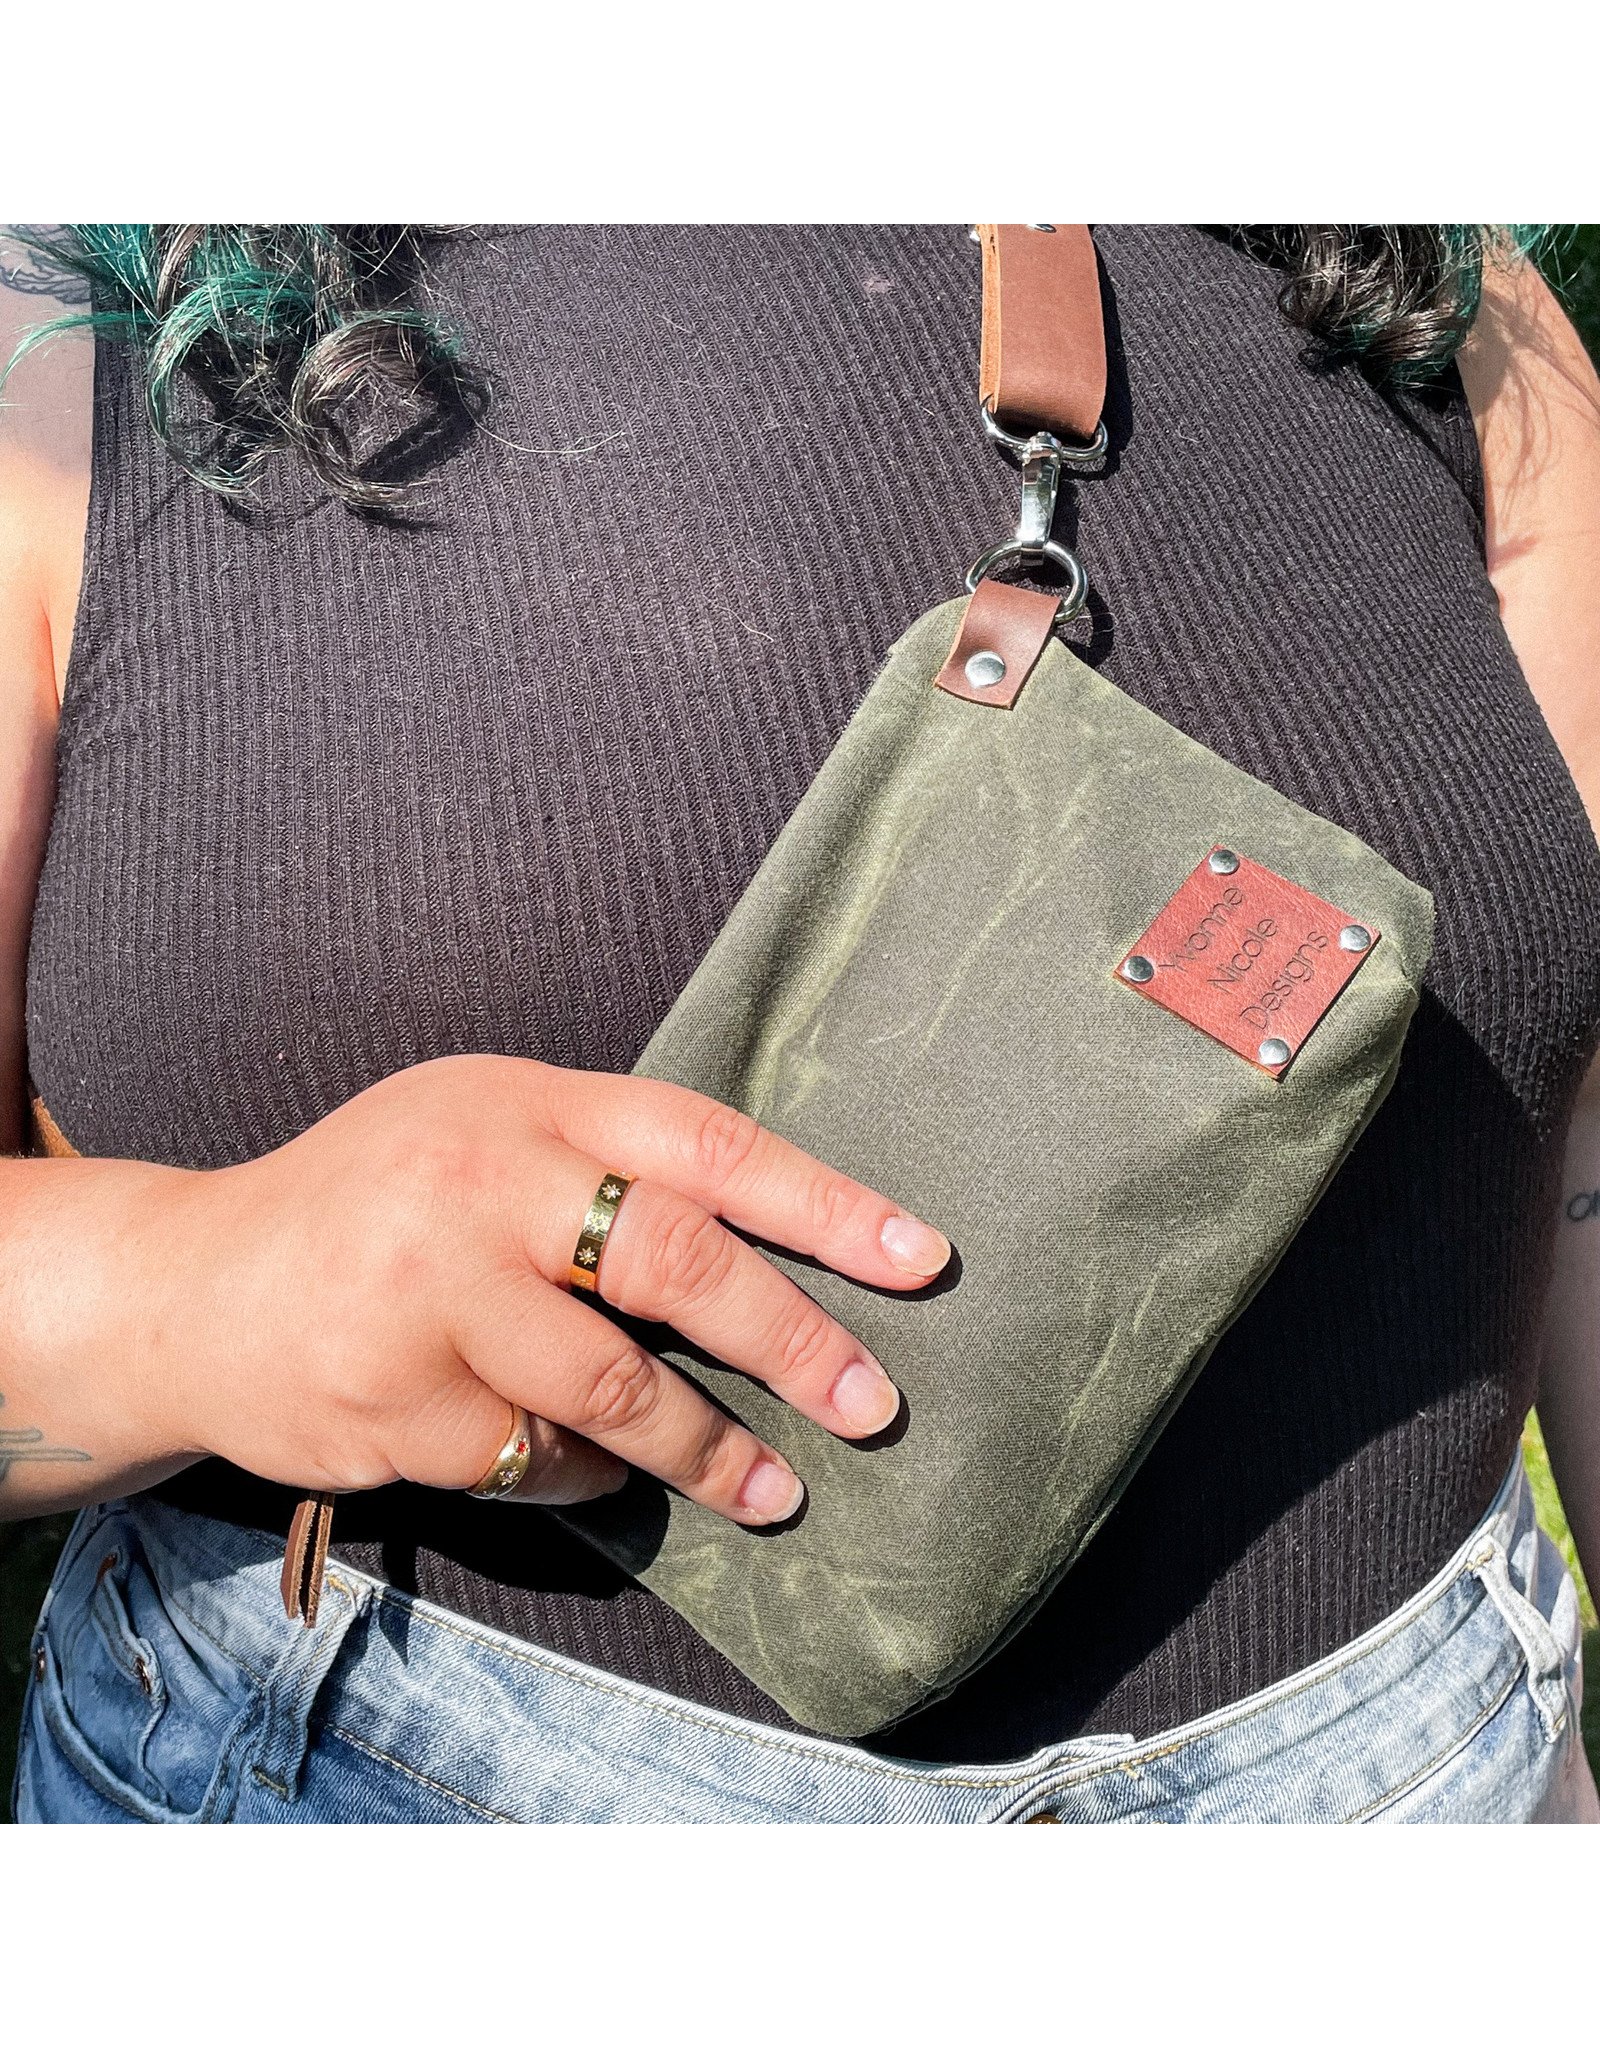 Yvonne Nicole Designs The Bum Bag - Juniper Green Consignment